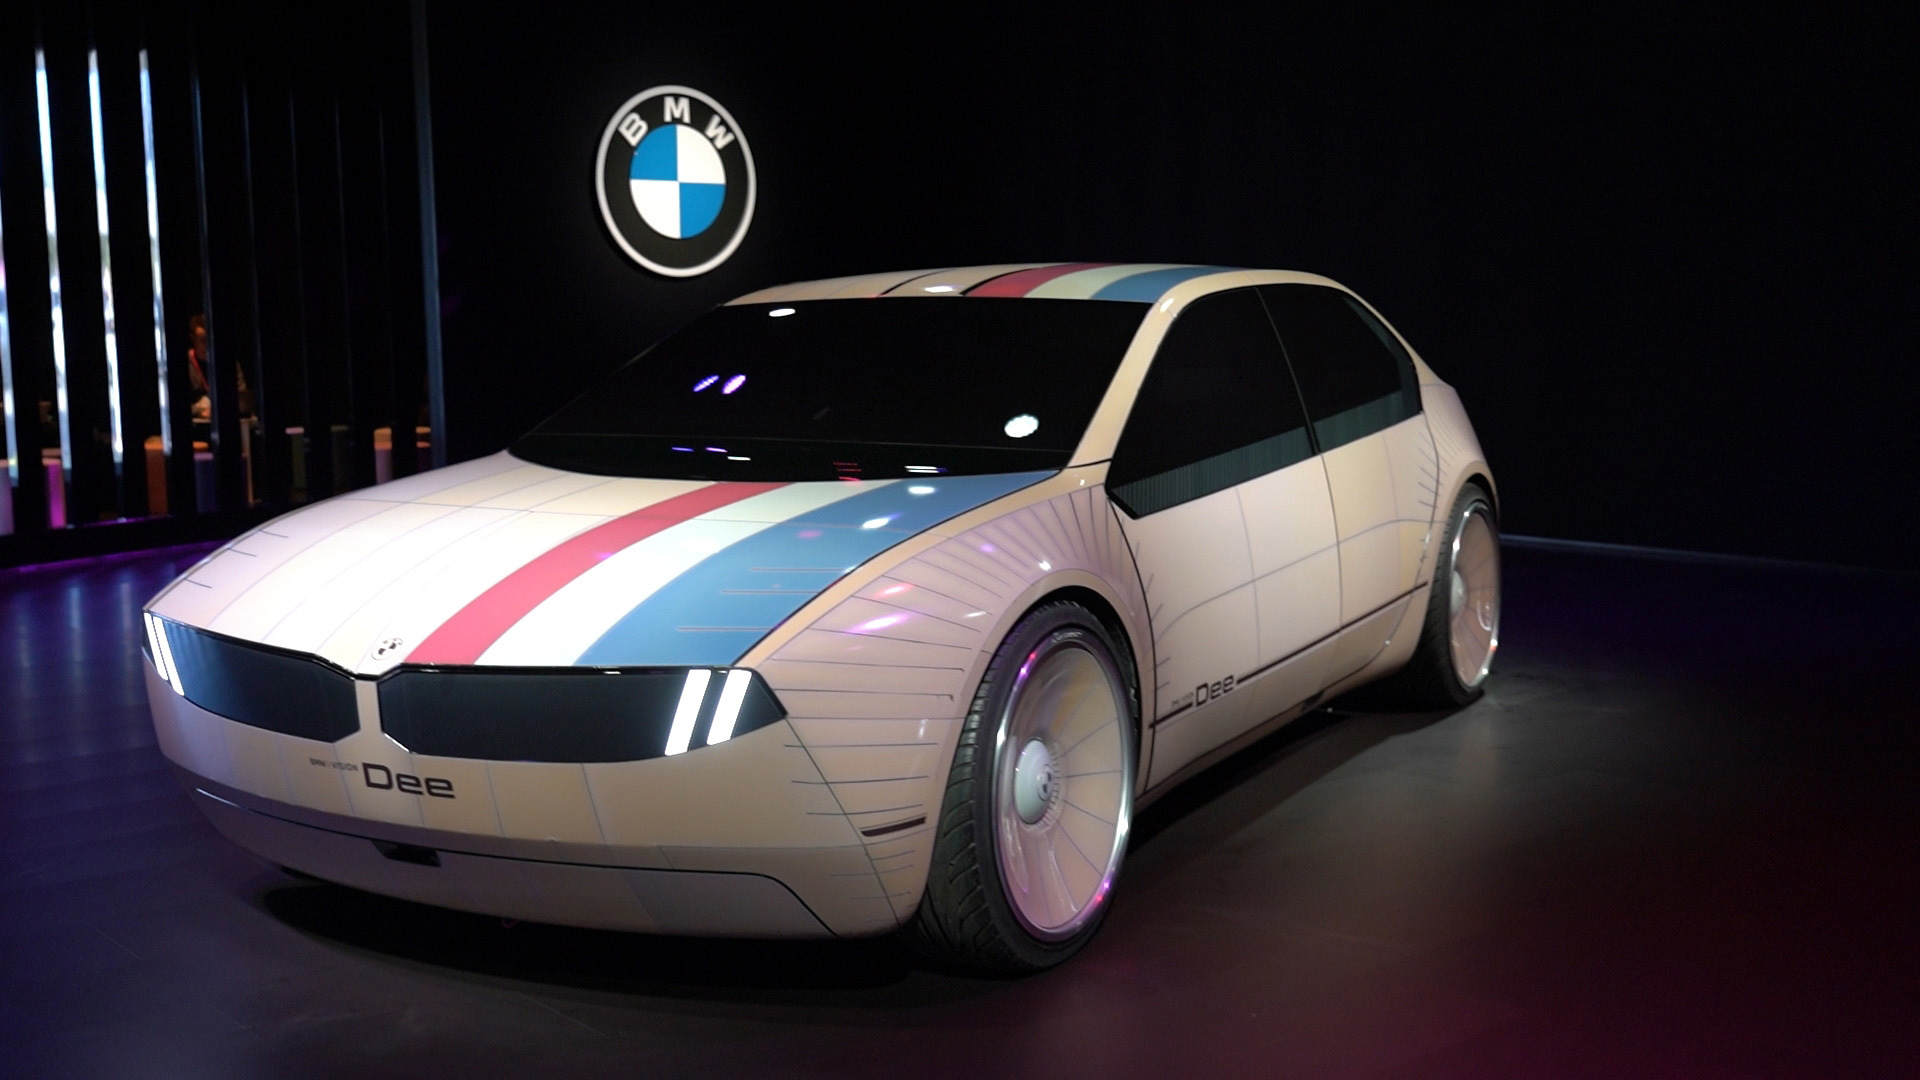 BMW iVision DEE car at CES Las Vegas